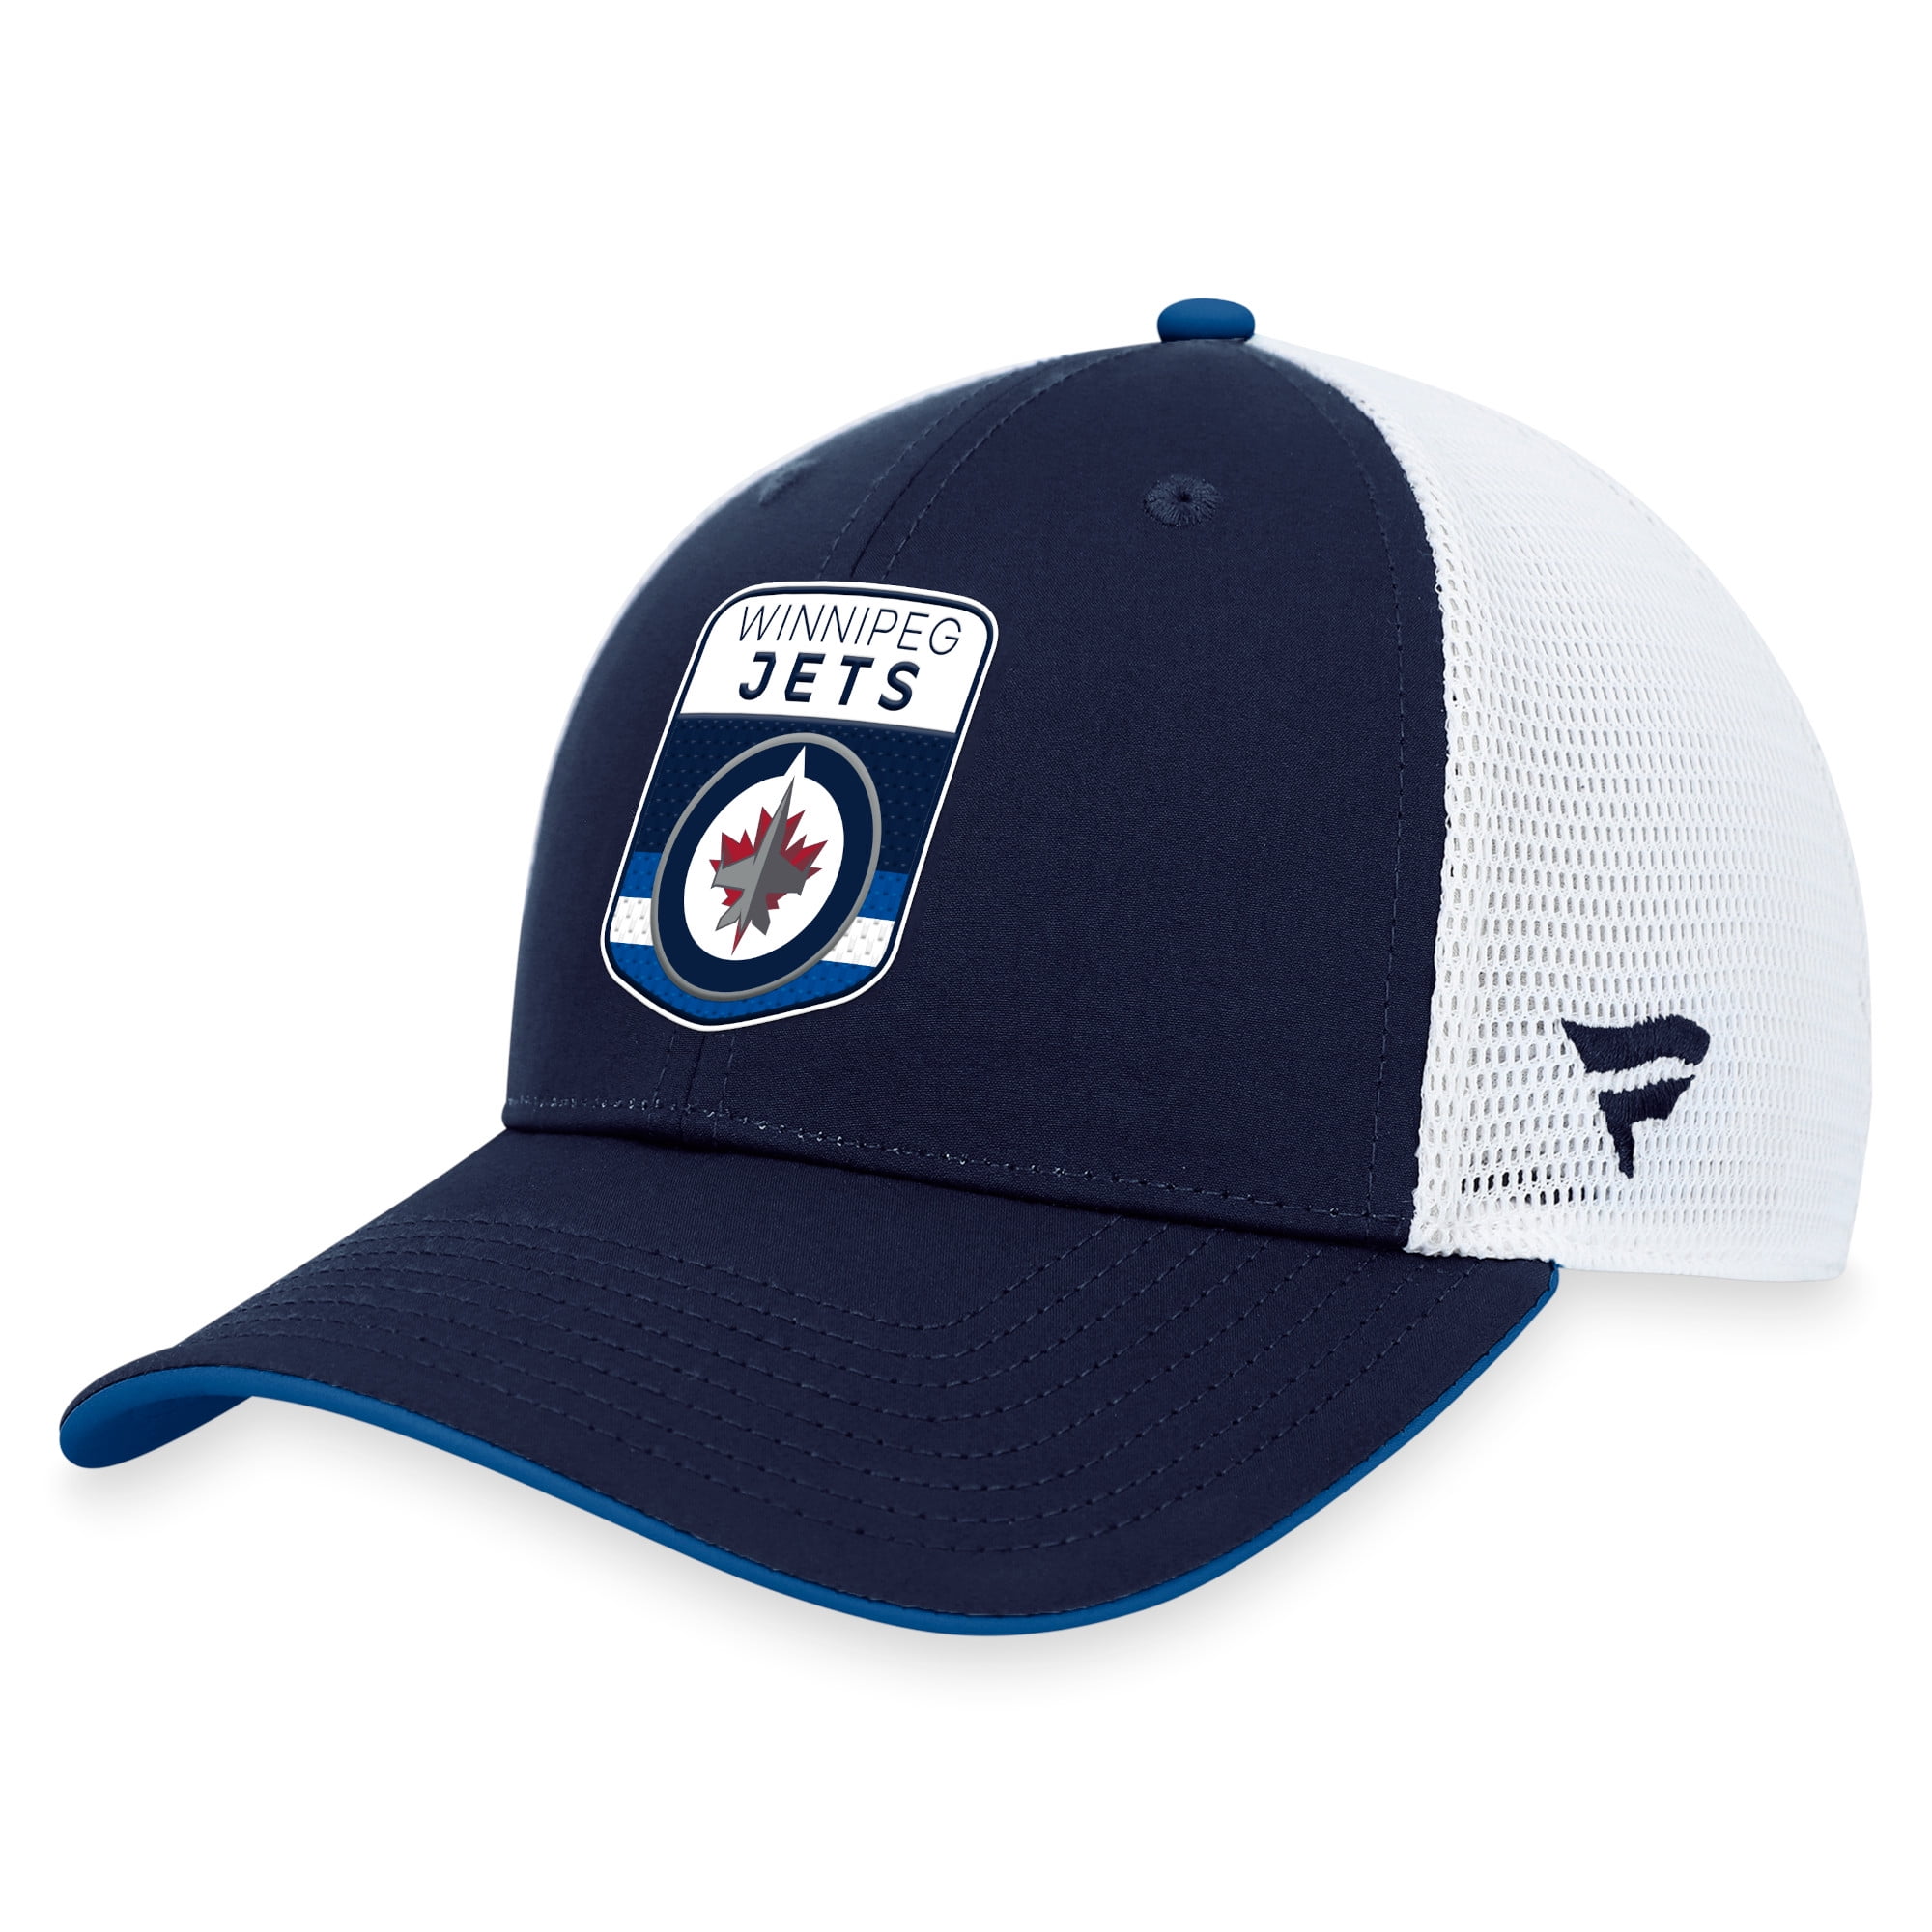 Winnipeg Jets online shop